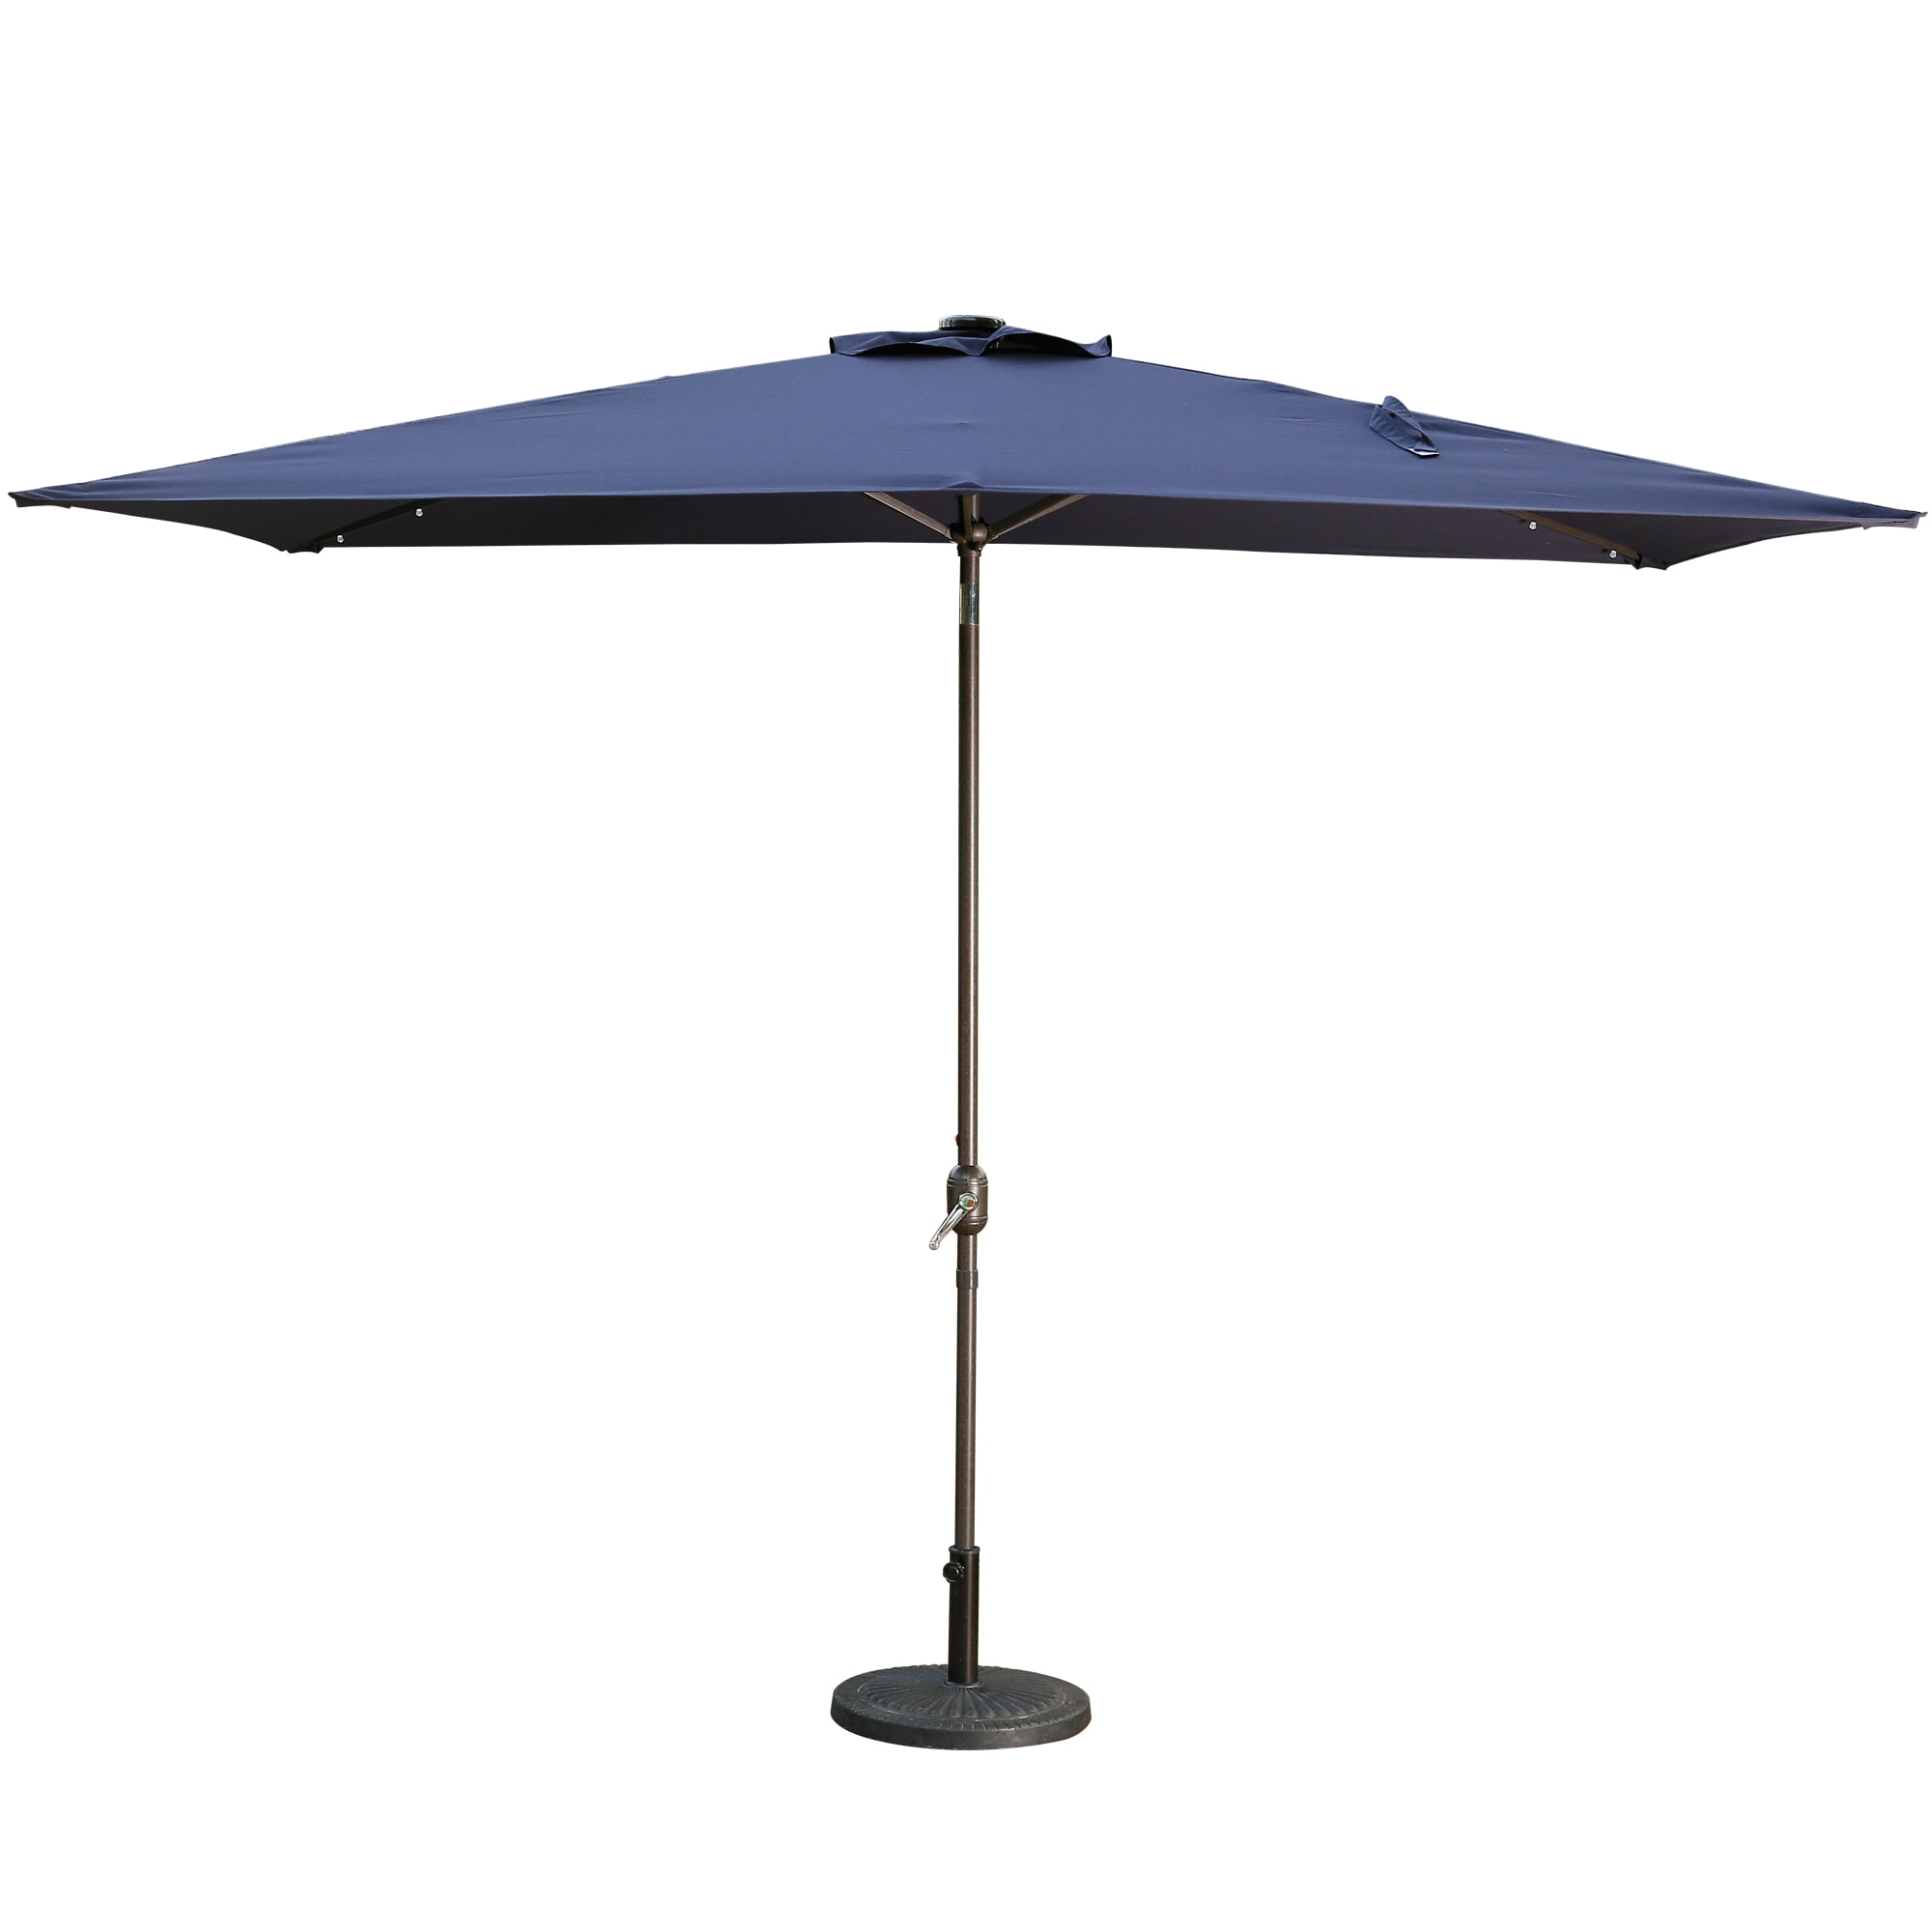 CASAINC Rectangular Patio Umbrellas at Lowes.com